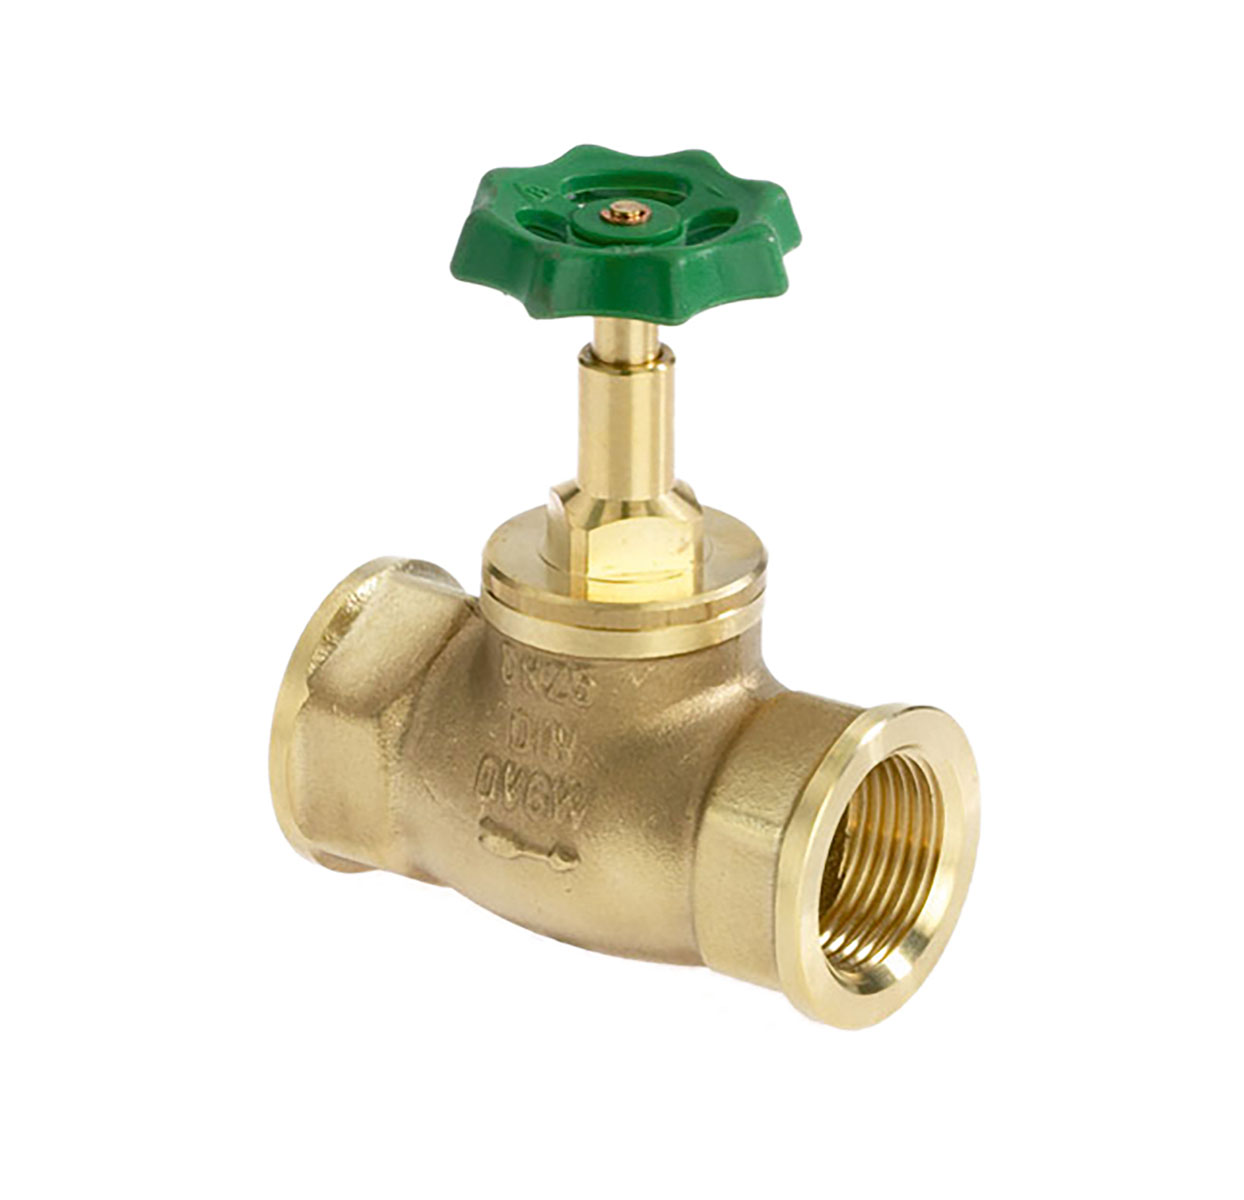 1300150 - CR-Brass Globe valve without drain valve, rising